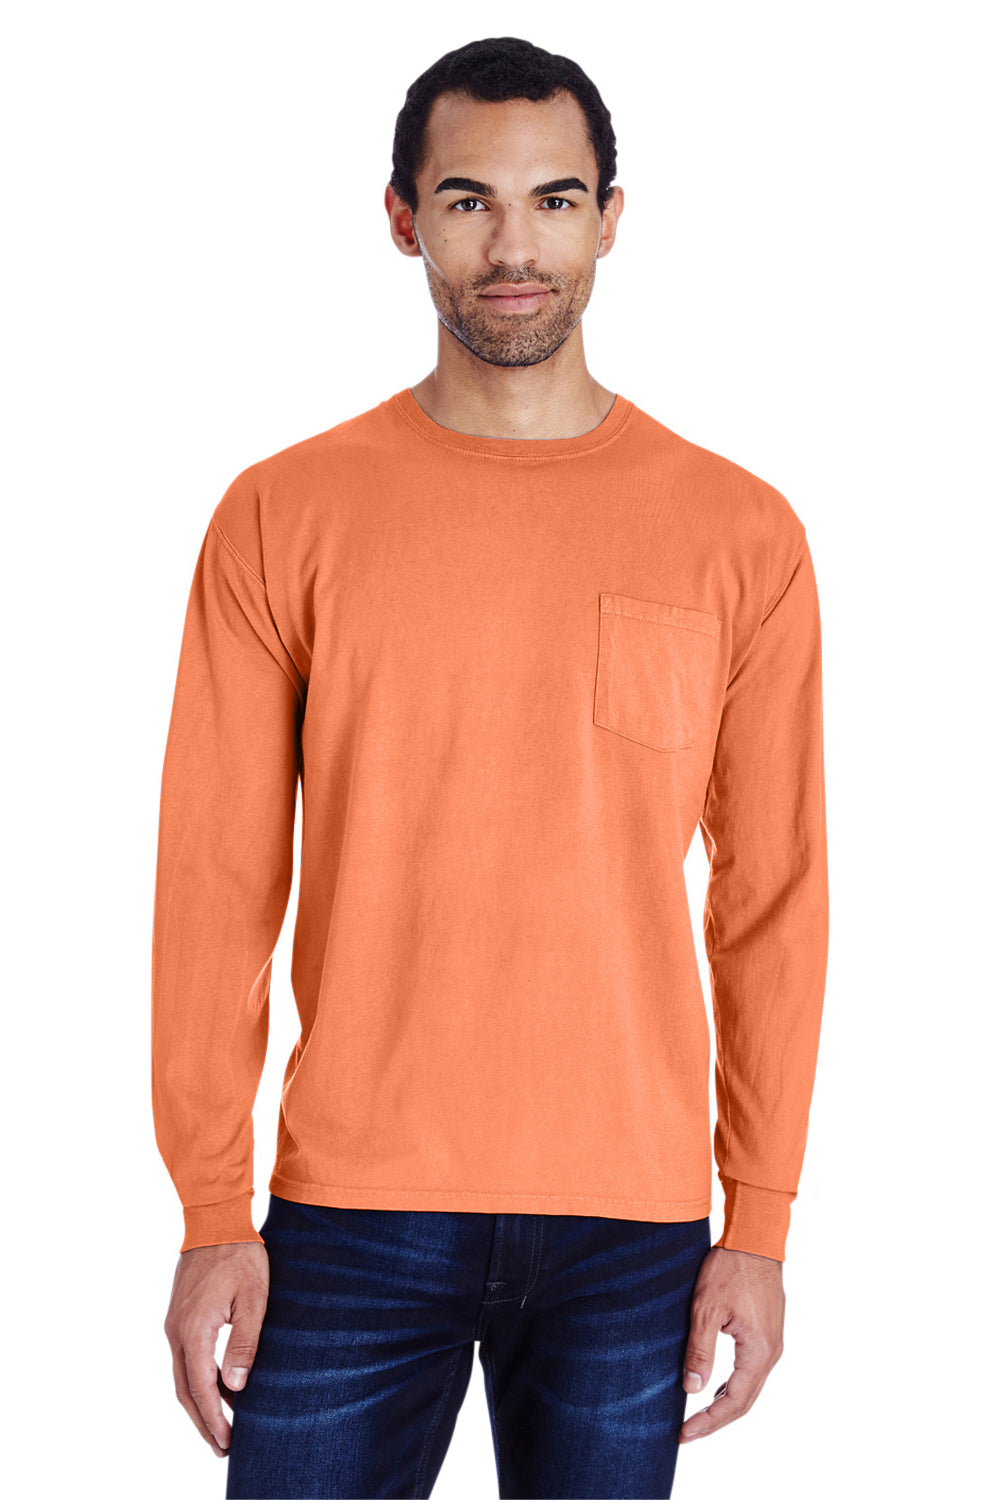 ComfortWash by Hanes GDH250 Long Sleeve Crewneck T-Shirt w/ Pocket Horizon Orange Front